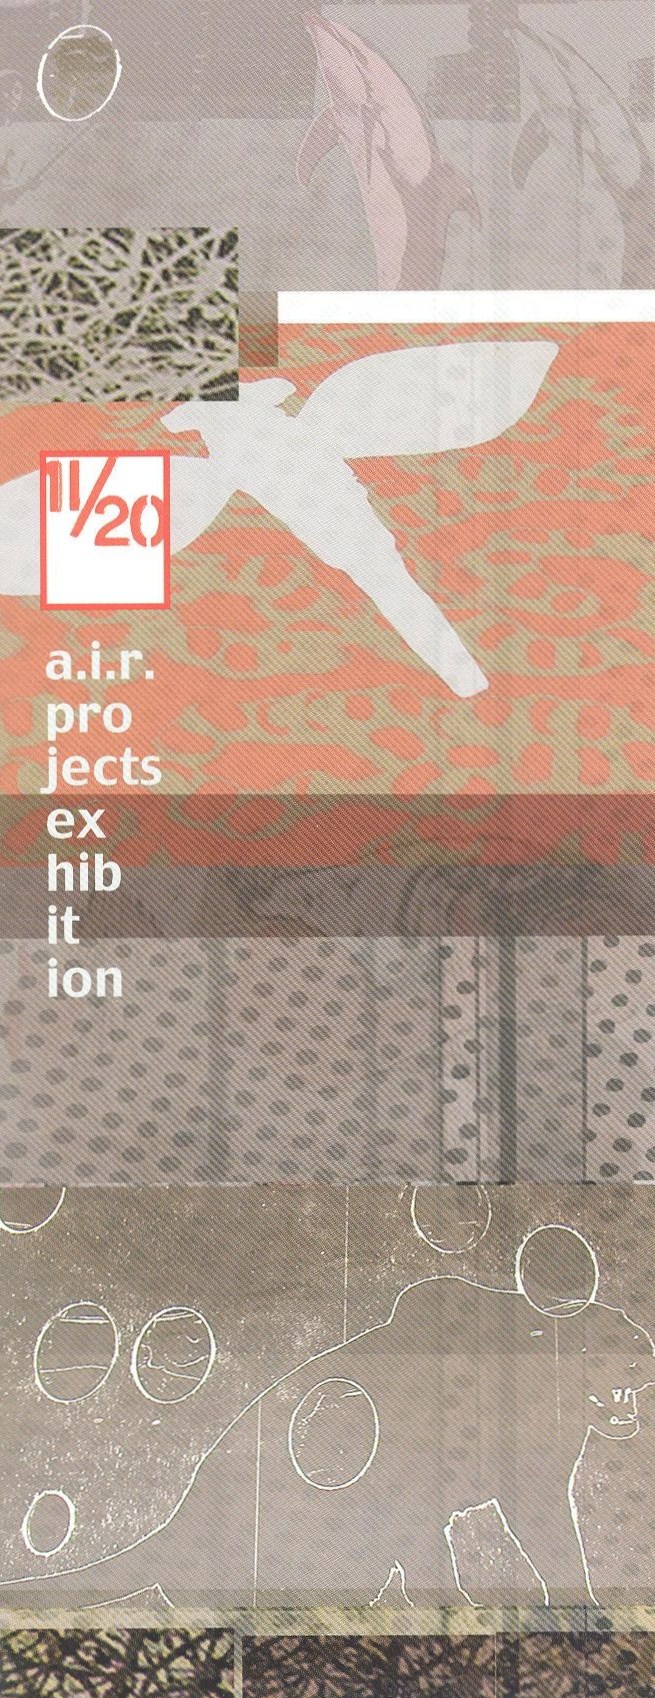 a.i.r exhibition1 001.jpg